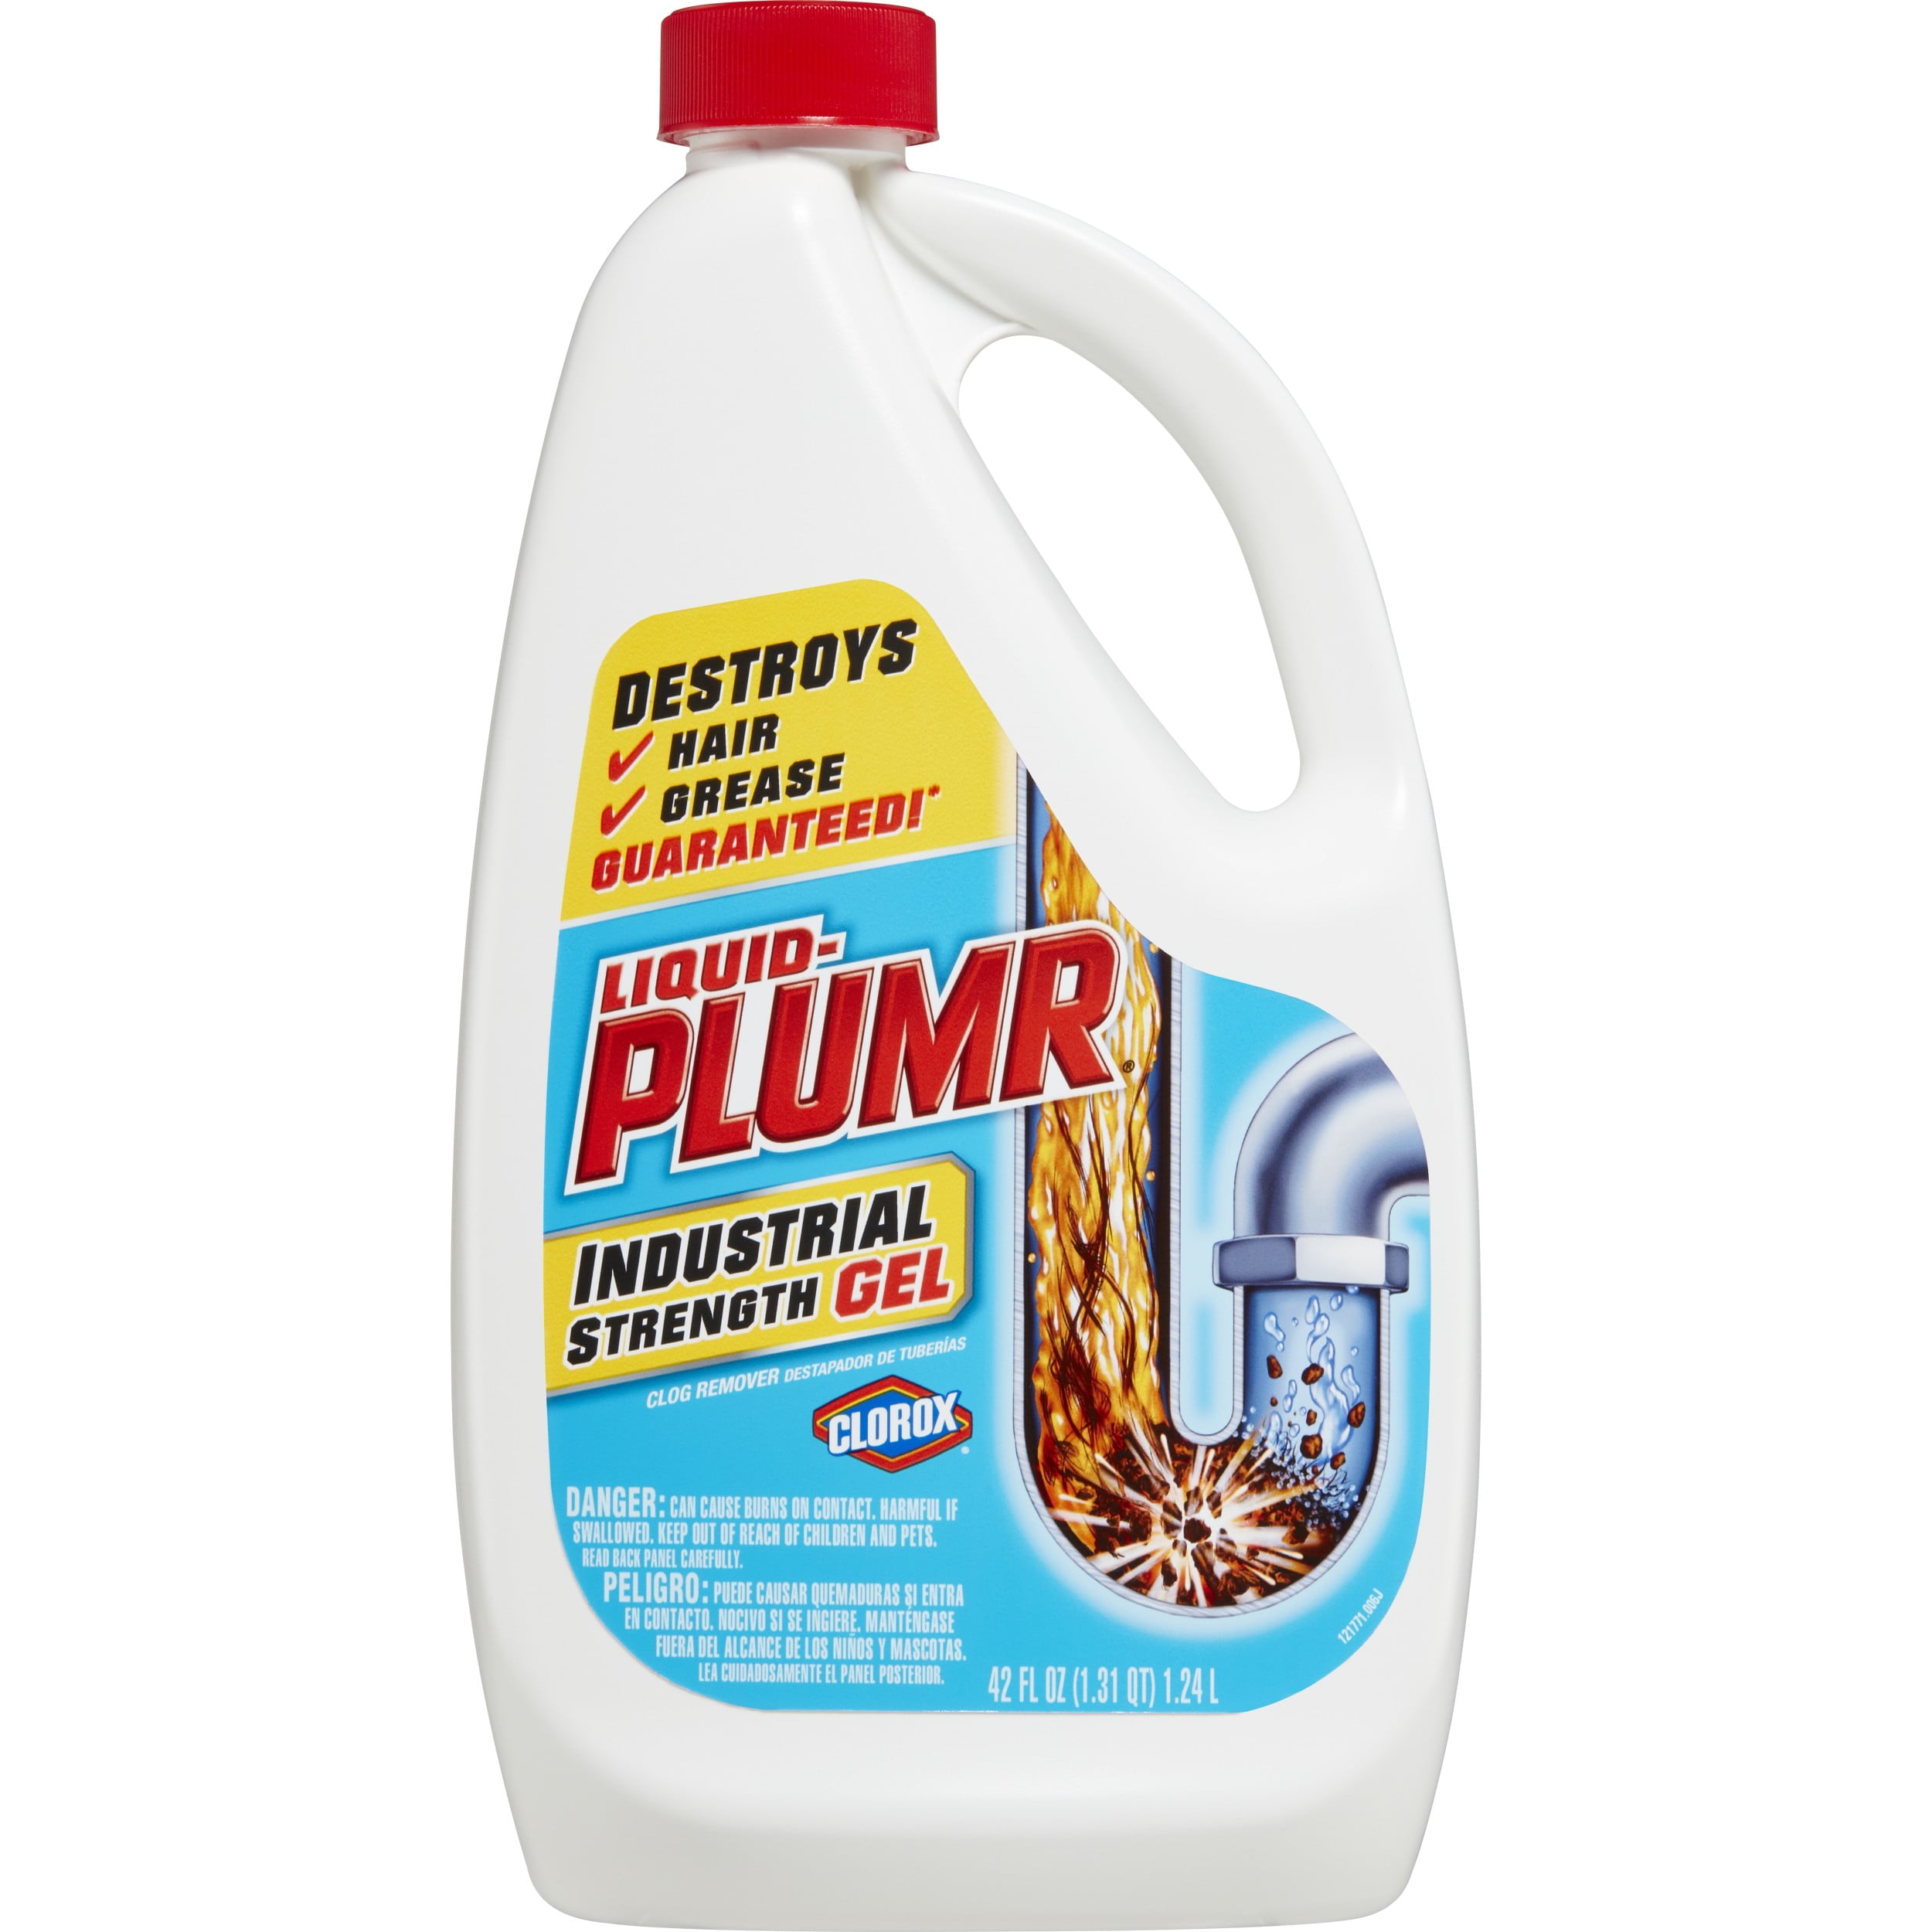 Liquid-Plumr Industrial Strength Drain Clog Remover Gel, Septic Safe, Unscented, 42 fl oz